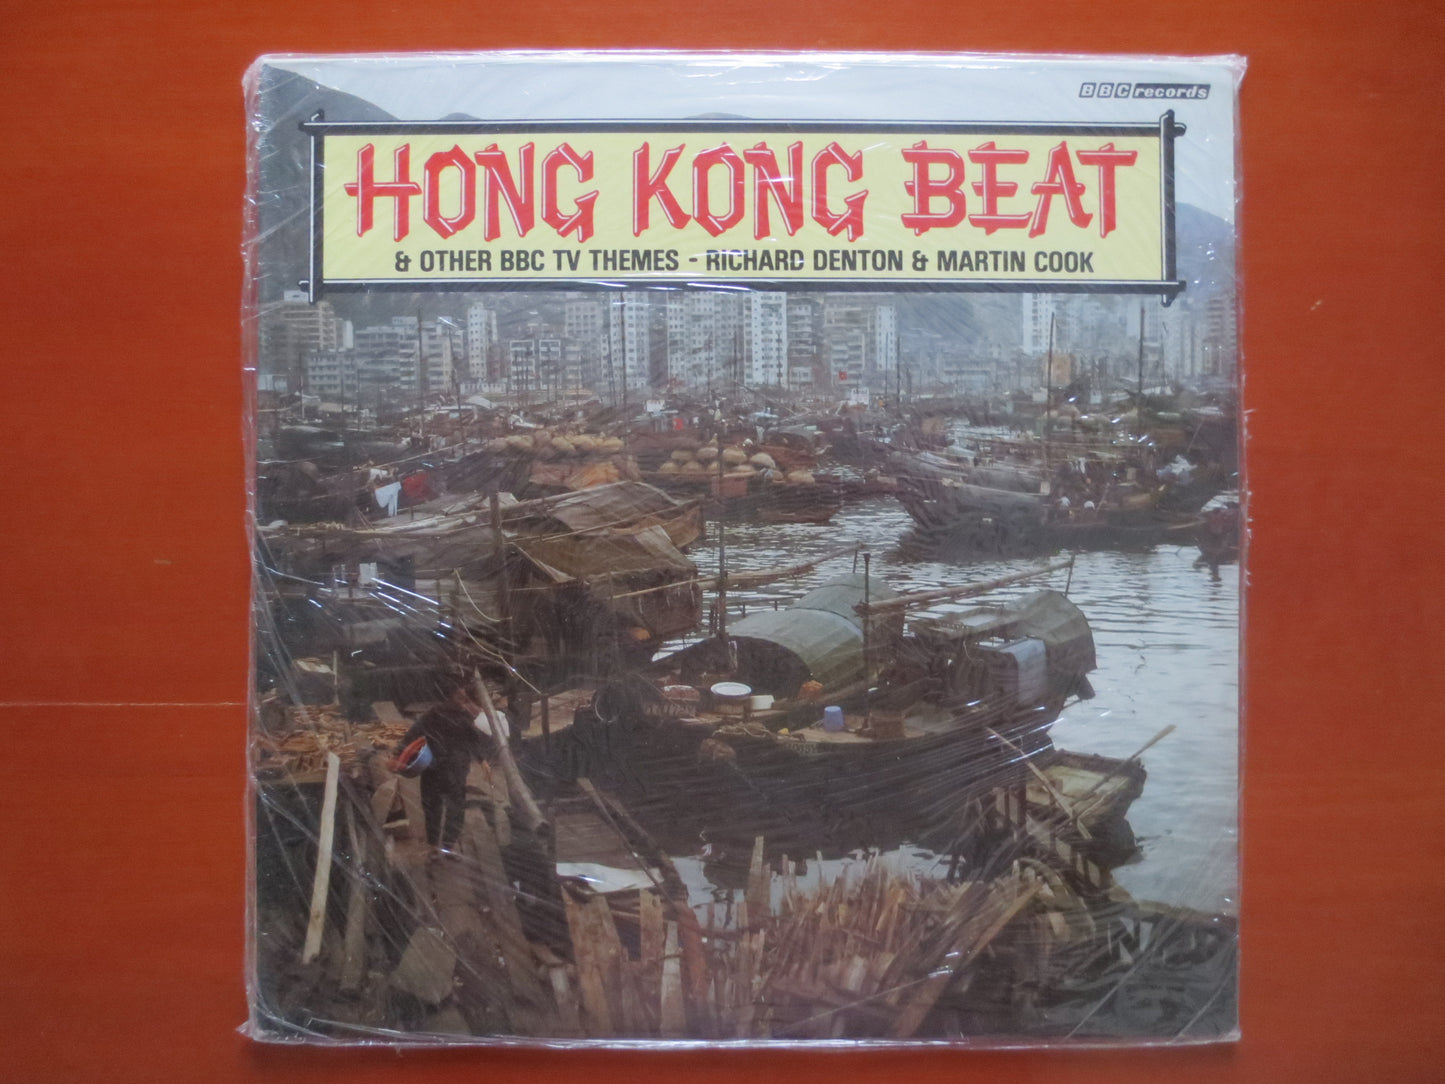 BBC RECORDS, Hong KONG Beat, Bbc Album, Bbc Vinyl, Bbc Lp, Tv Theme Record, Tv Theme Album, Tv Theme Vinyl, 1980 Records